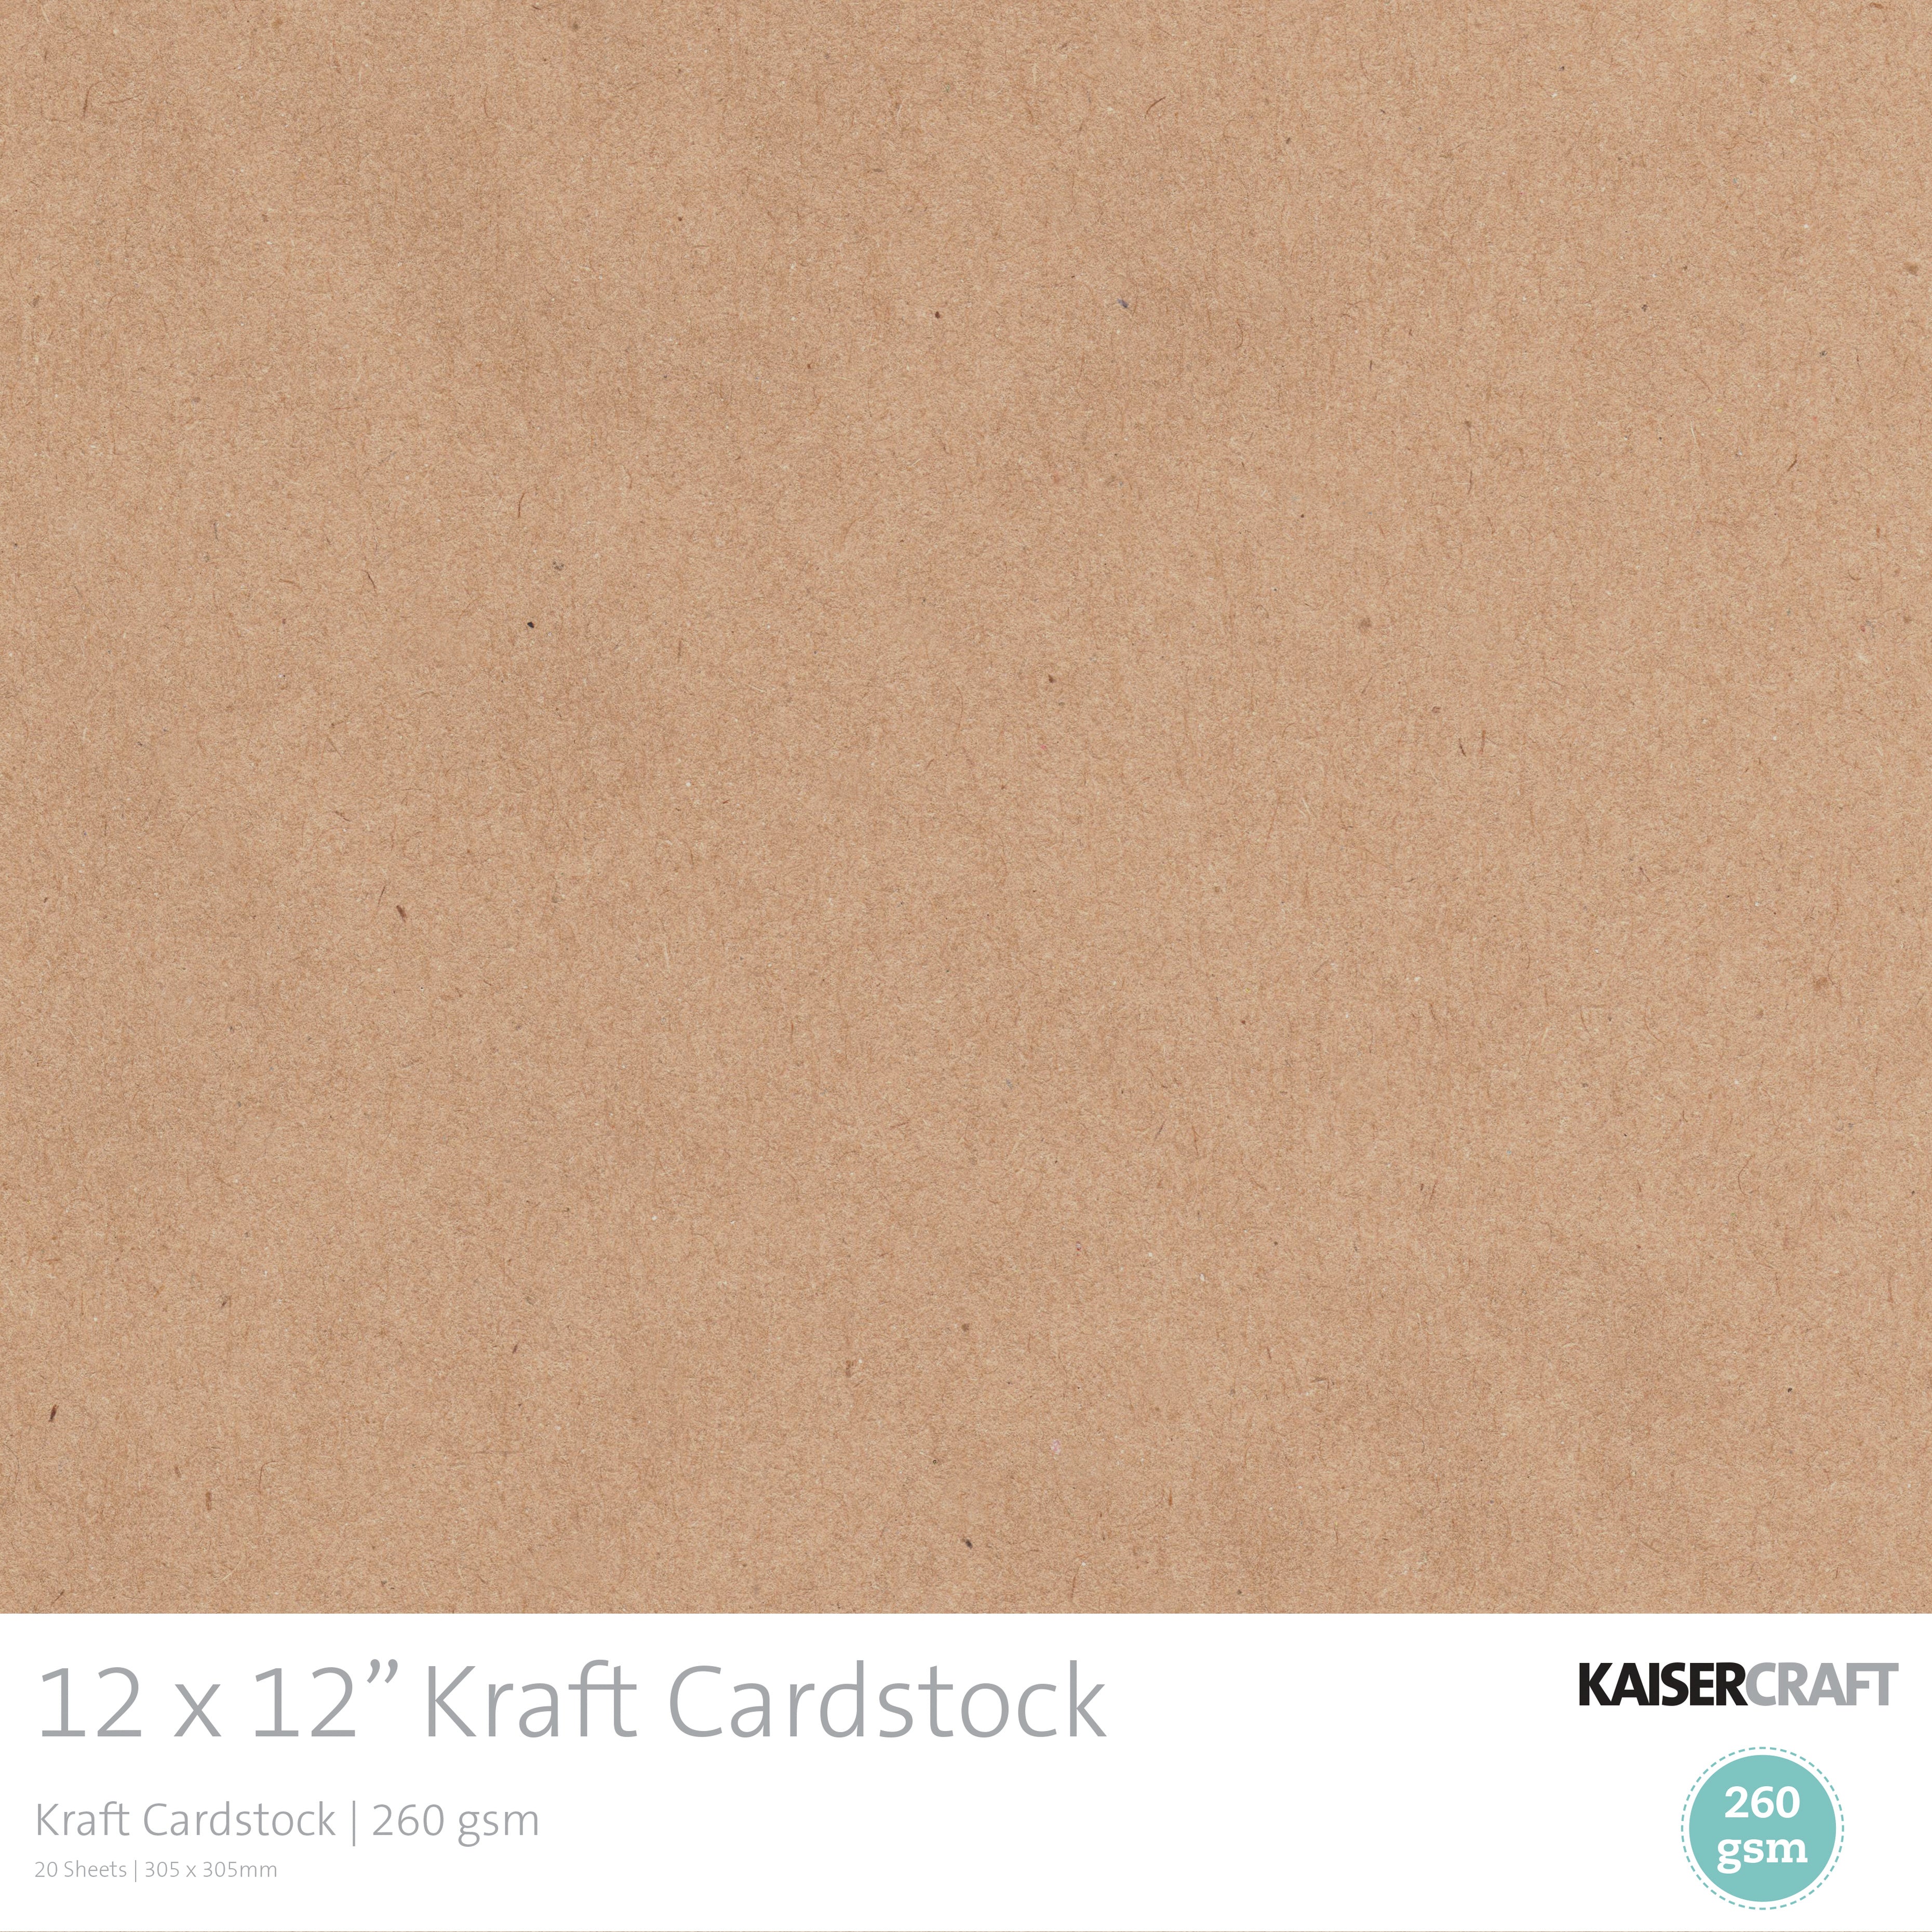 Kraft Cardstock 12 x 12 20 Sheets